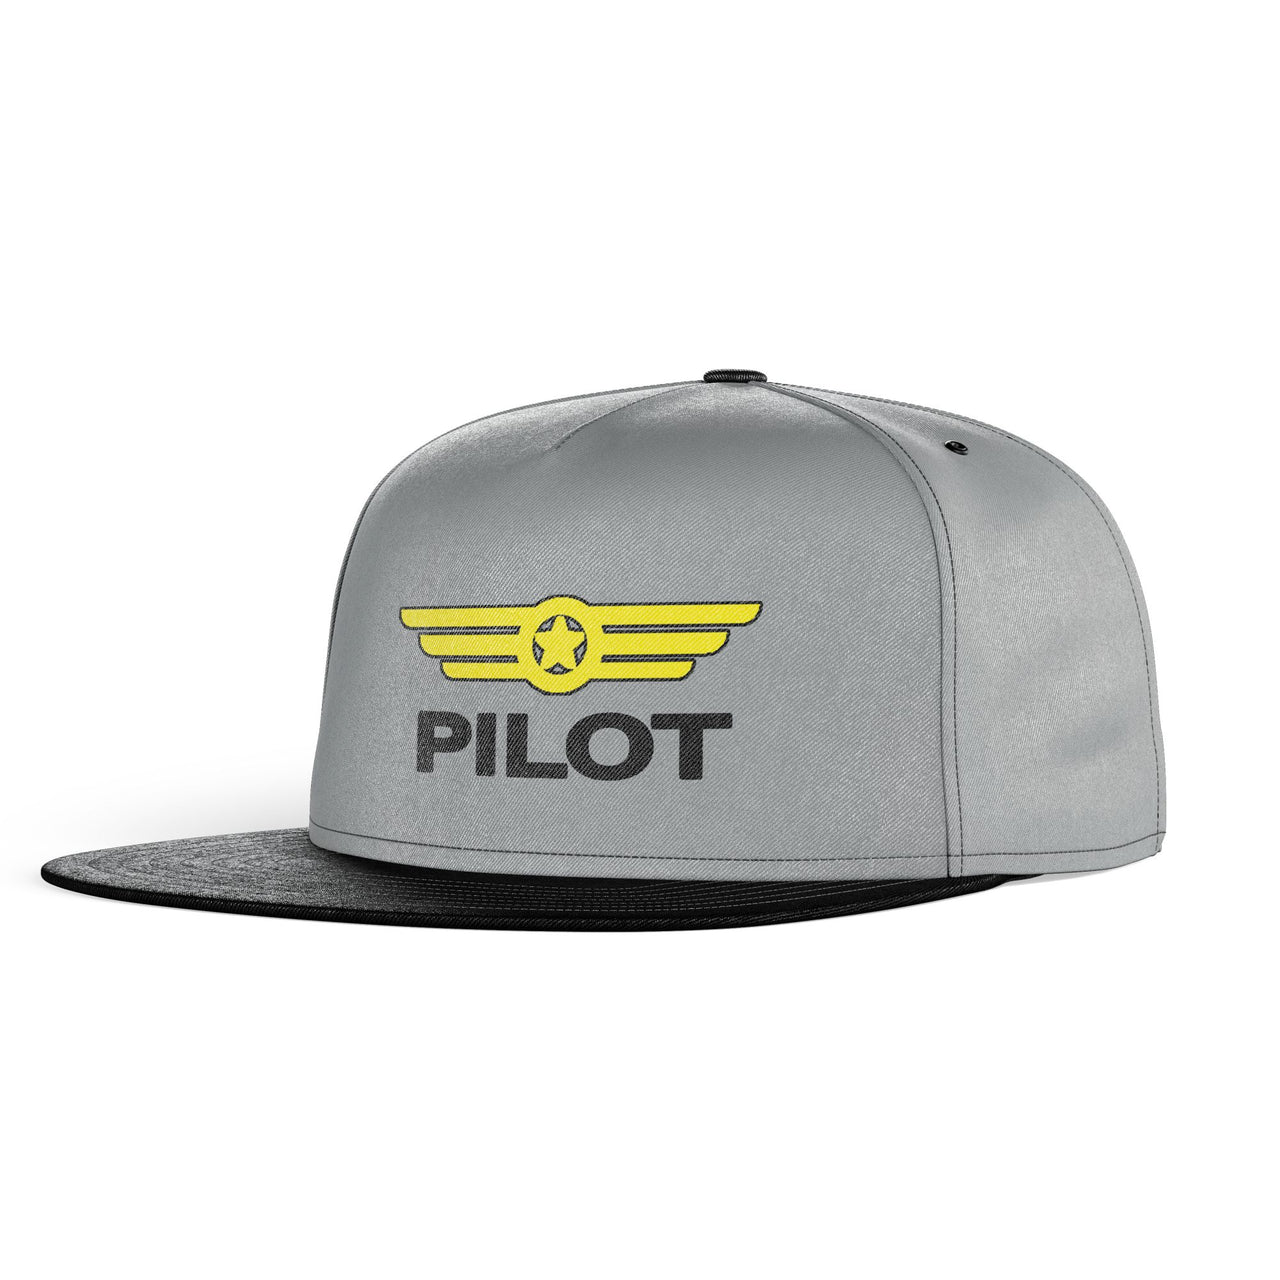 Pilot & Badge Designed Snapback Caps & Hats